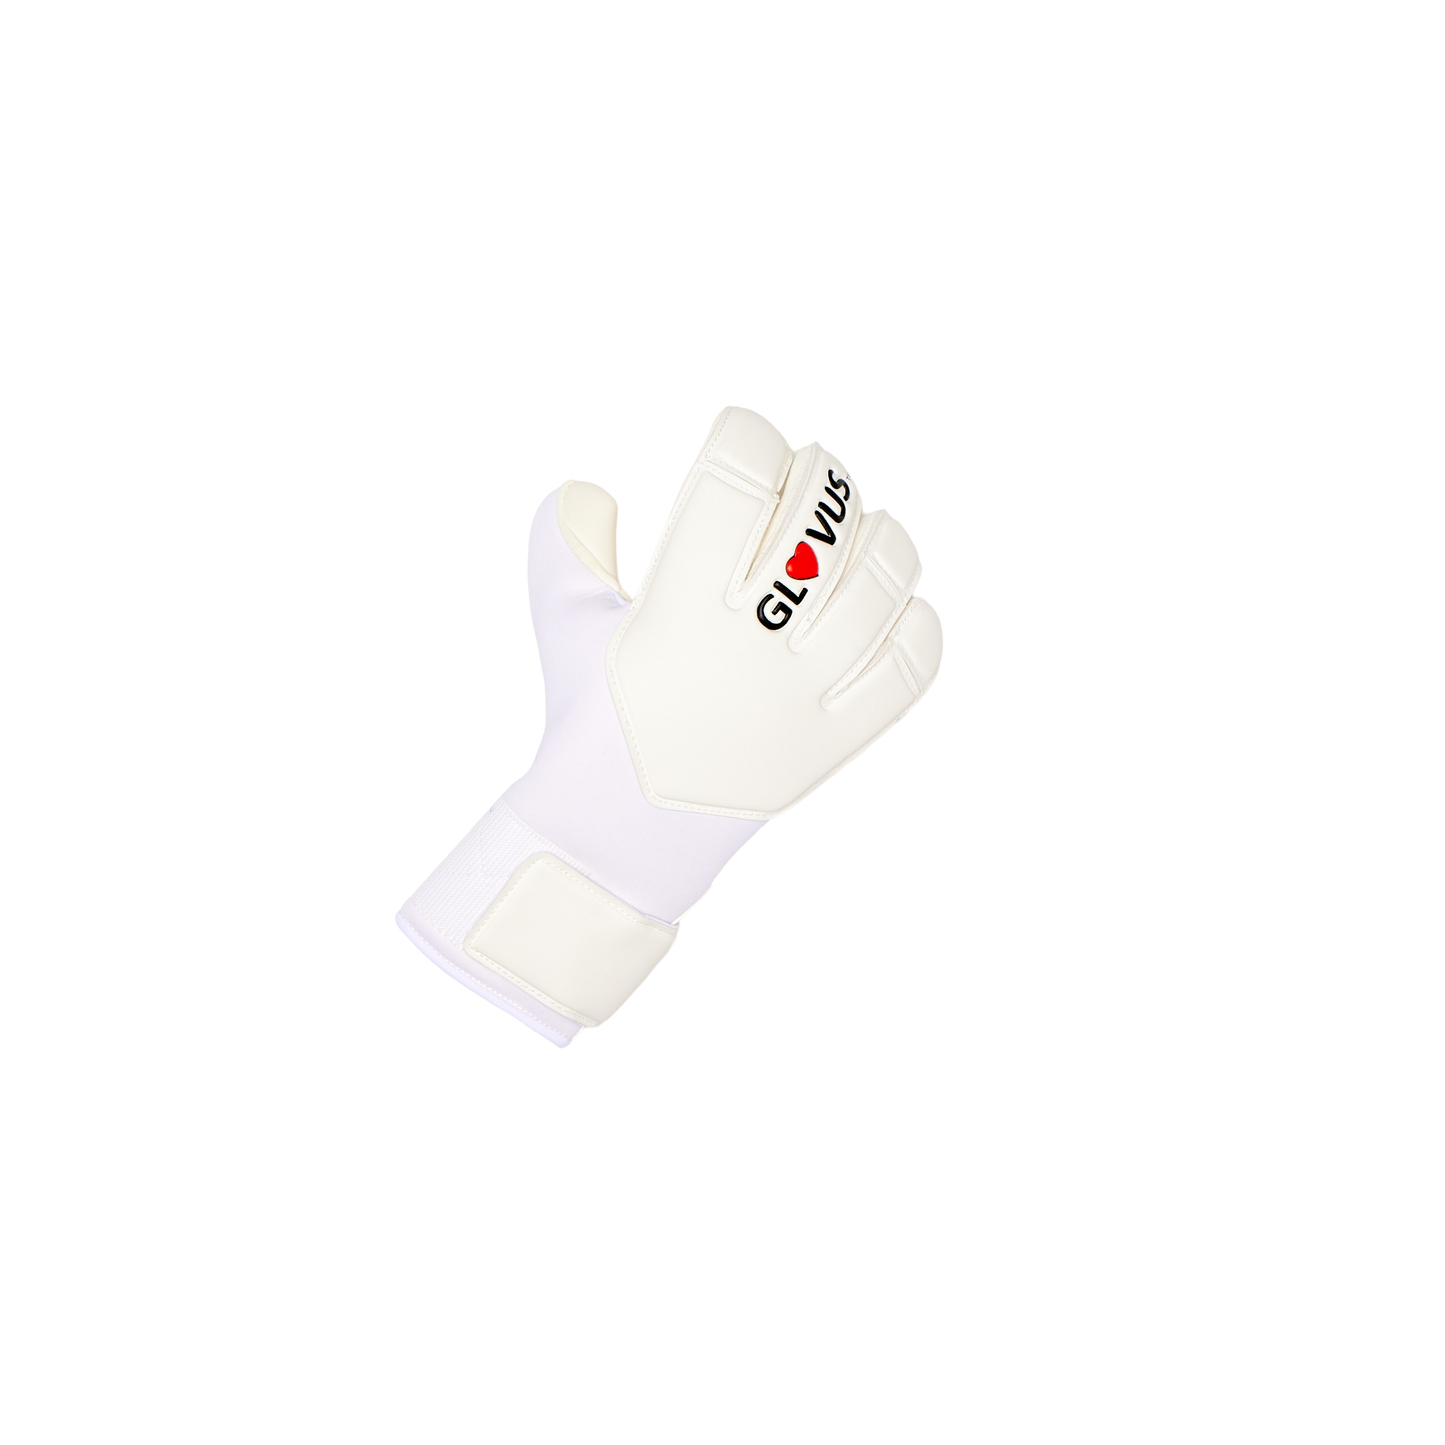 Youth Standard Goalkeeper Gloves